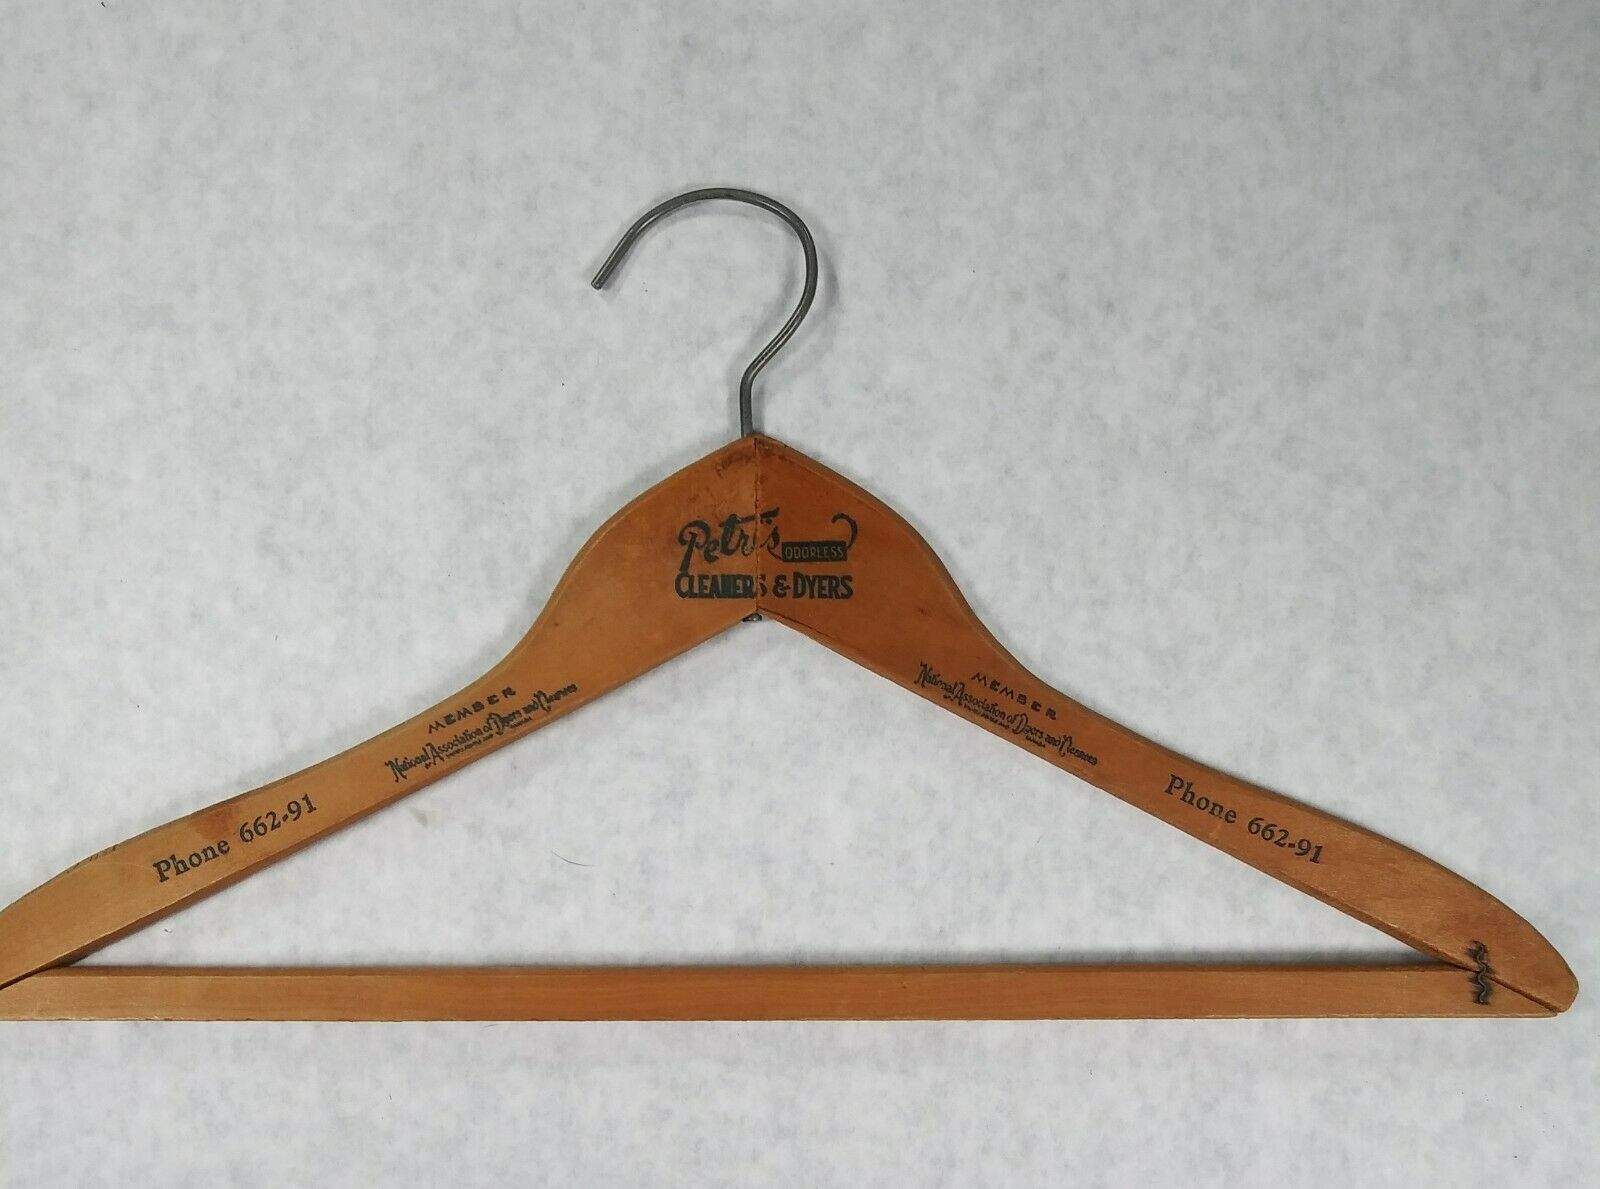 Vintage Petri's Dry Cleaners Shirt Suit Pants Wood Clothes Hanger Phone# 662-91